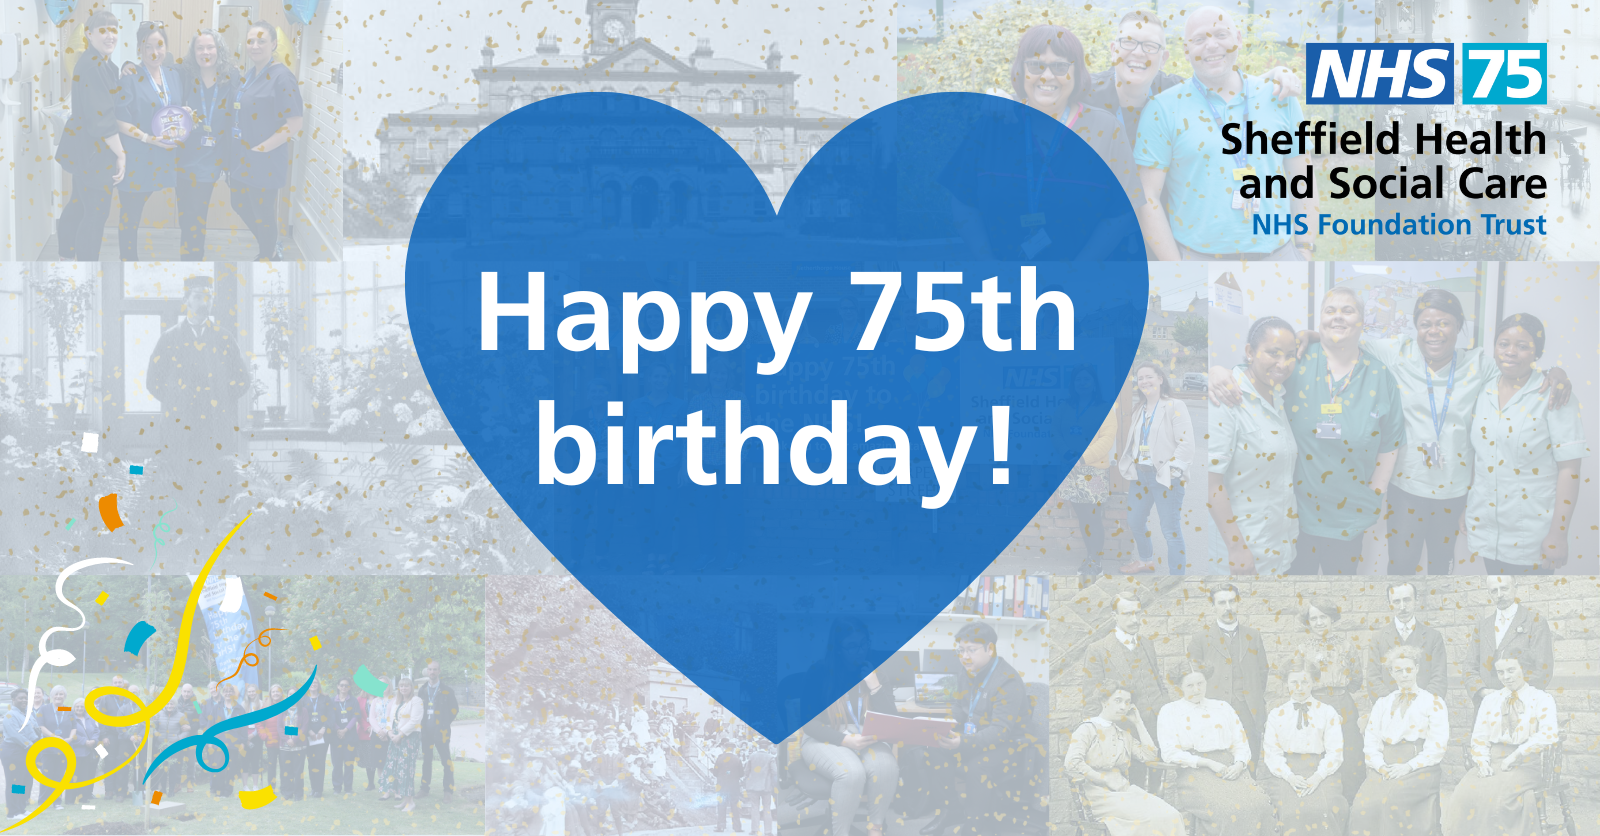 Happy 75th birthday!